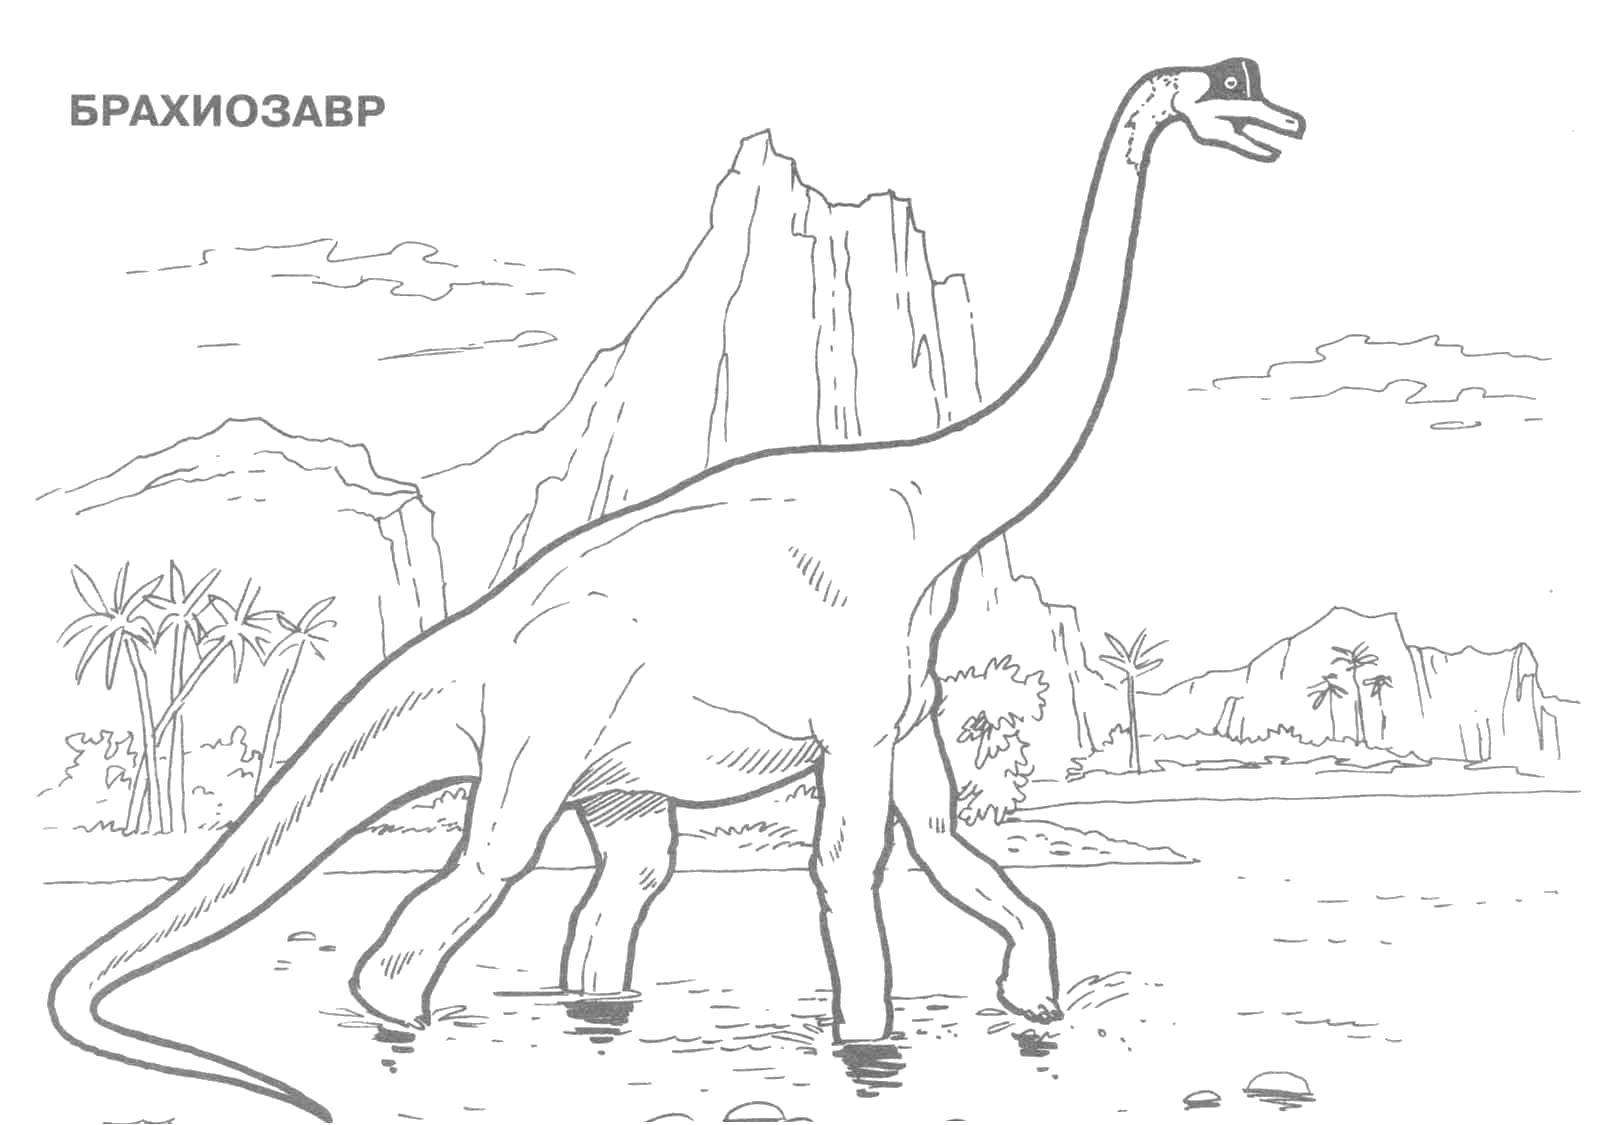 Coloring Brachiosaurus. Category Jurassic Park. Tags:  Dinosaurs.